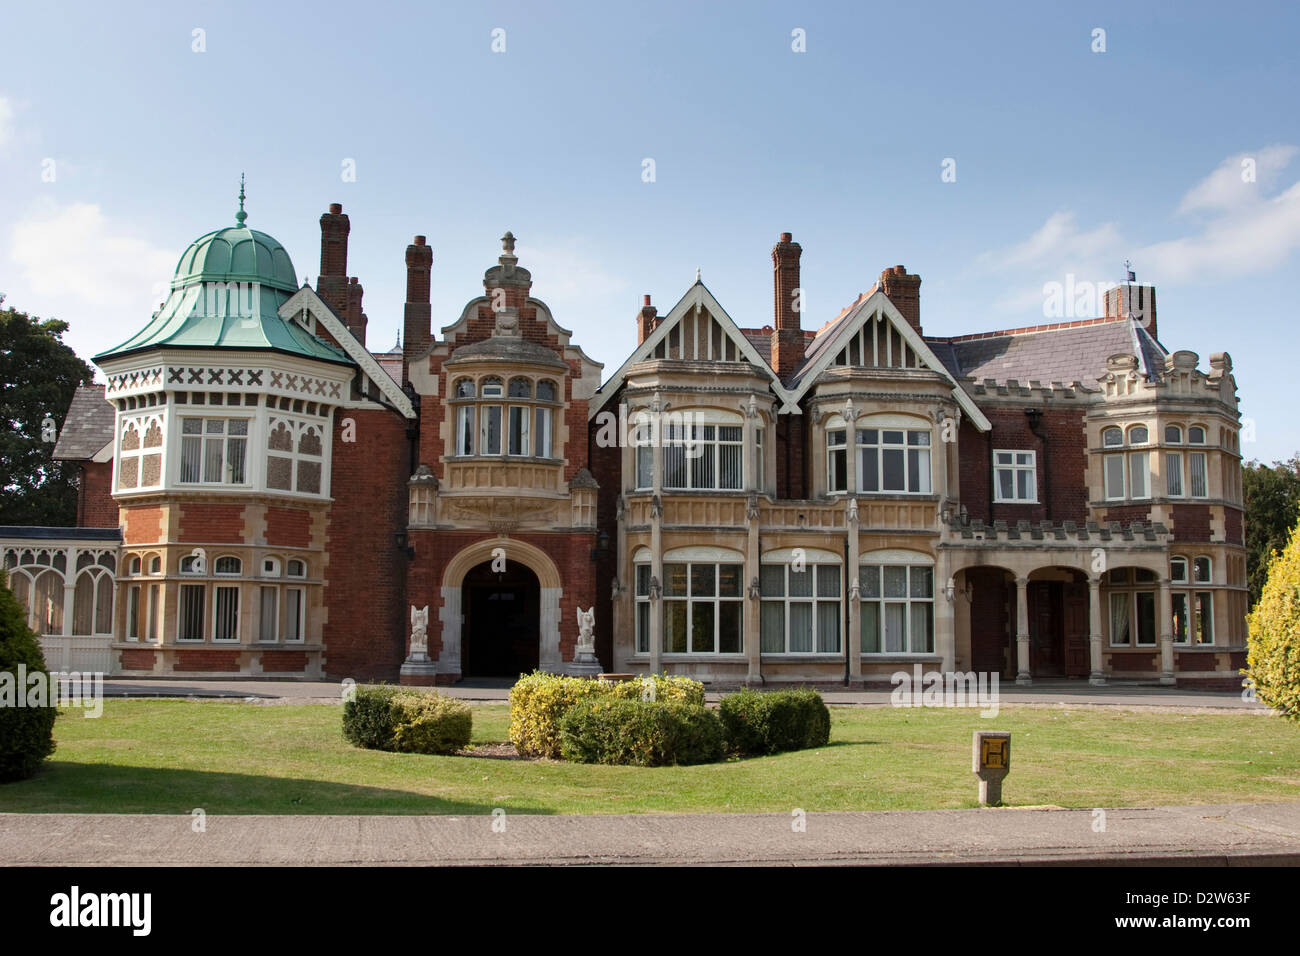 Bletchley Park Mansion, Bletchley, England. Stockfoto